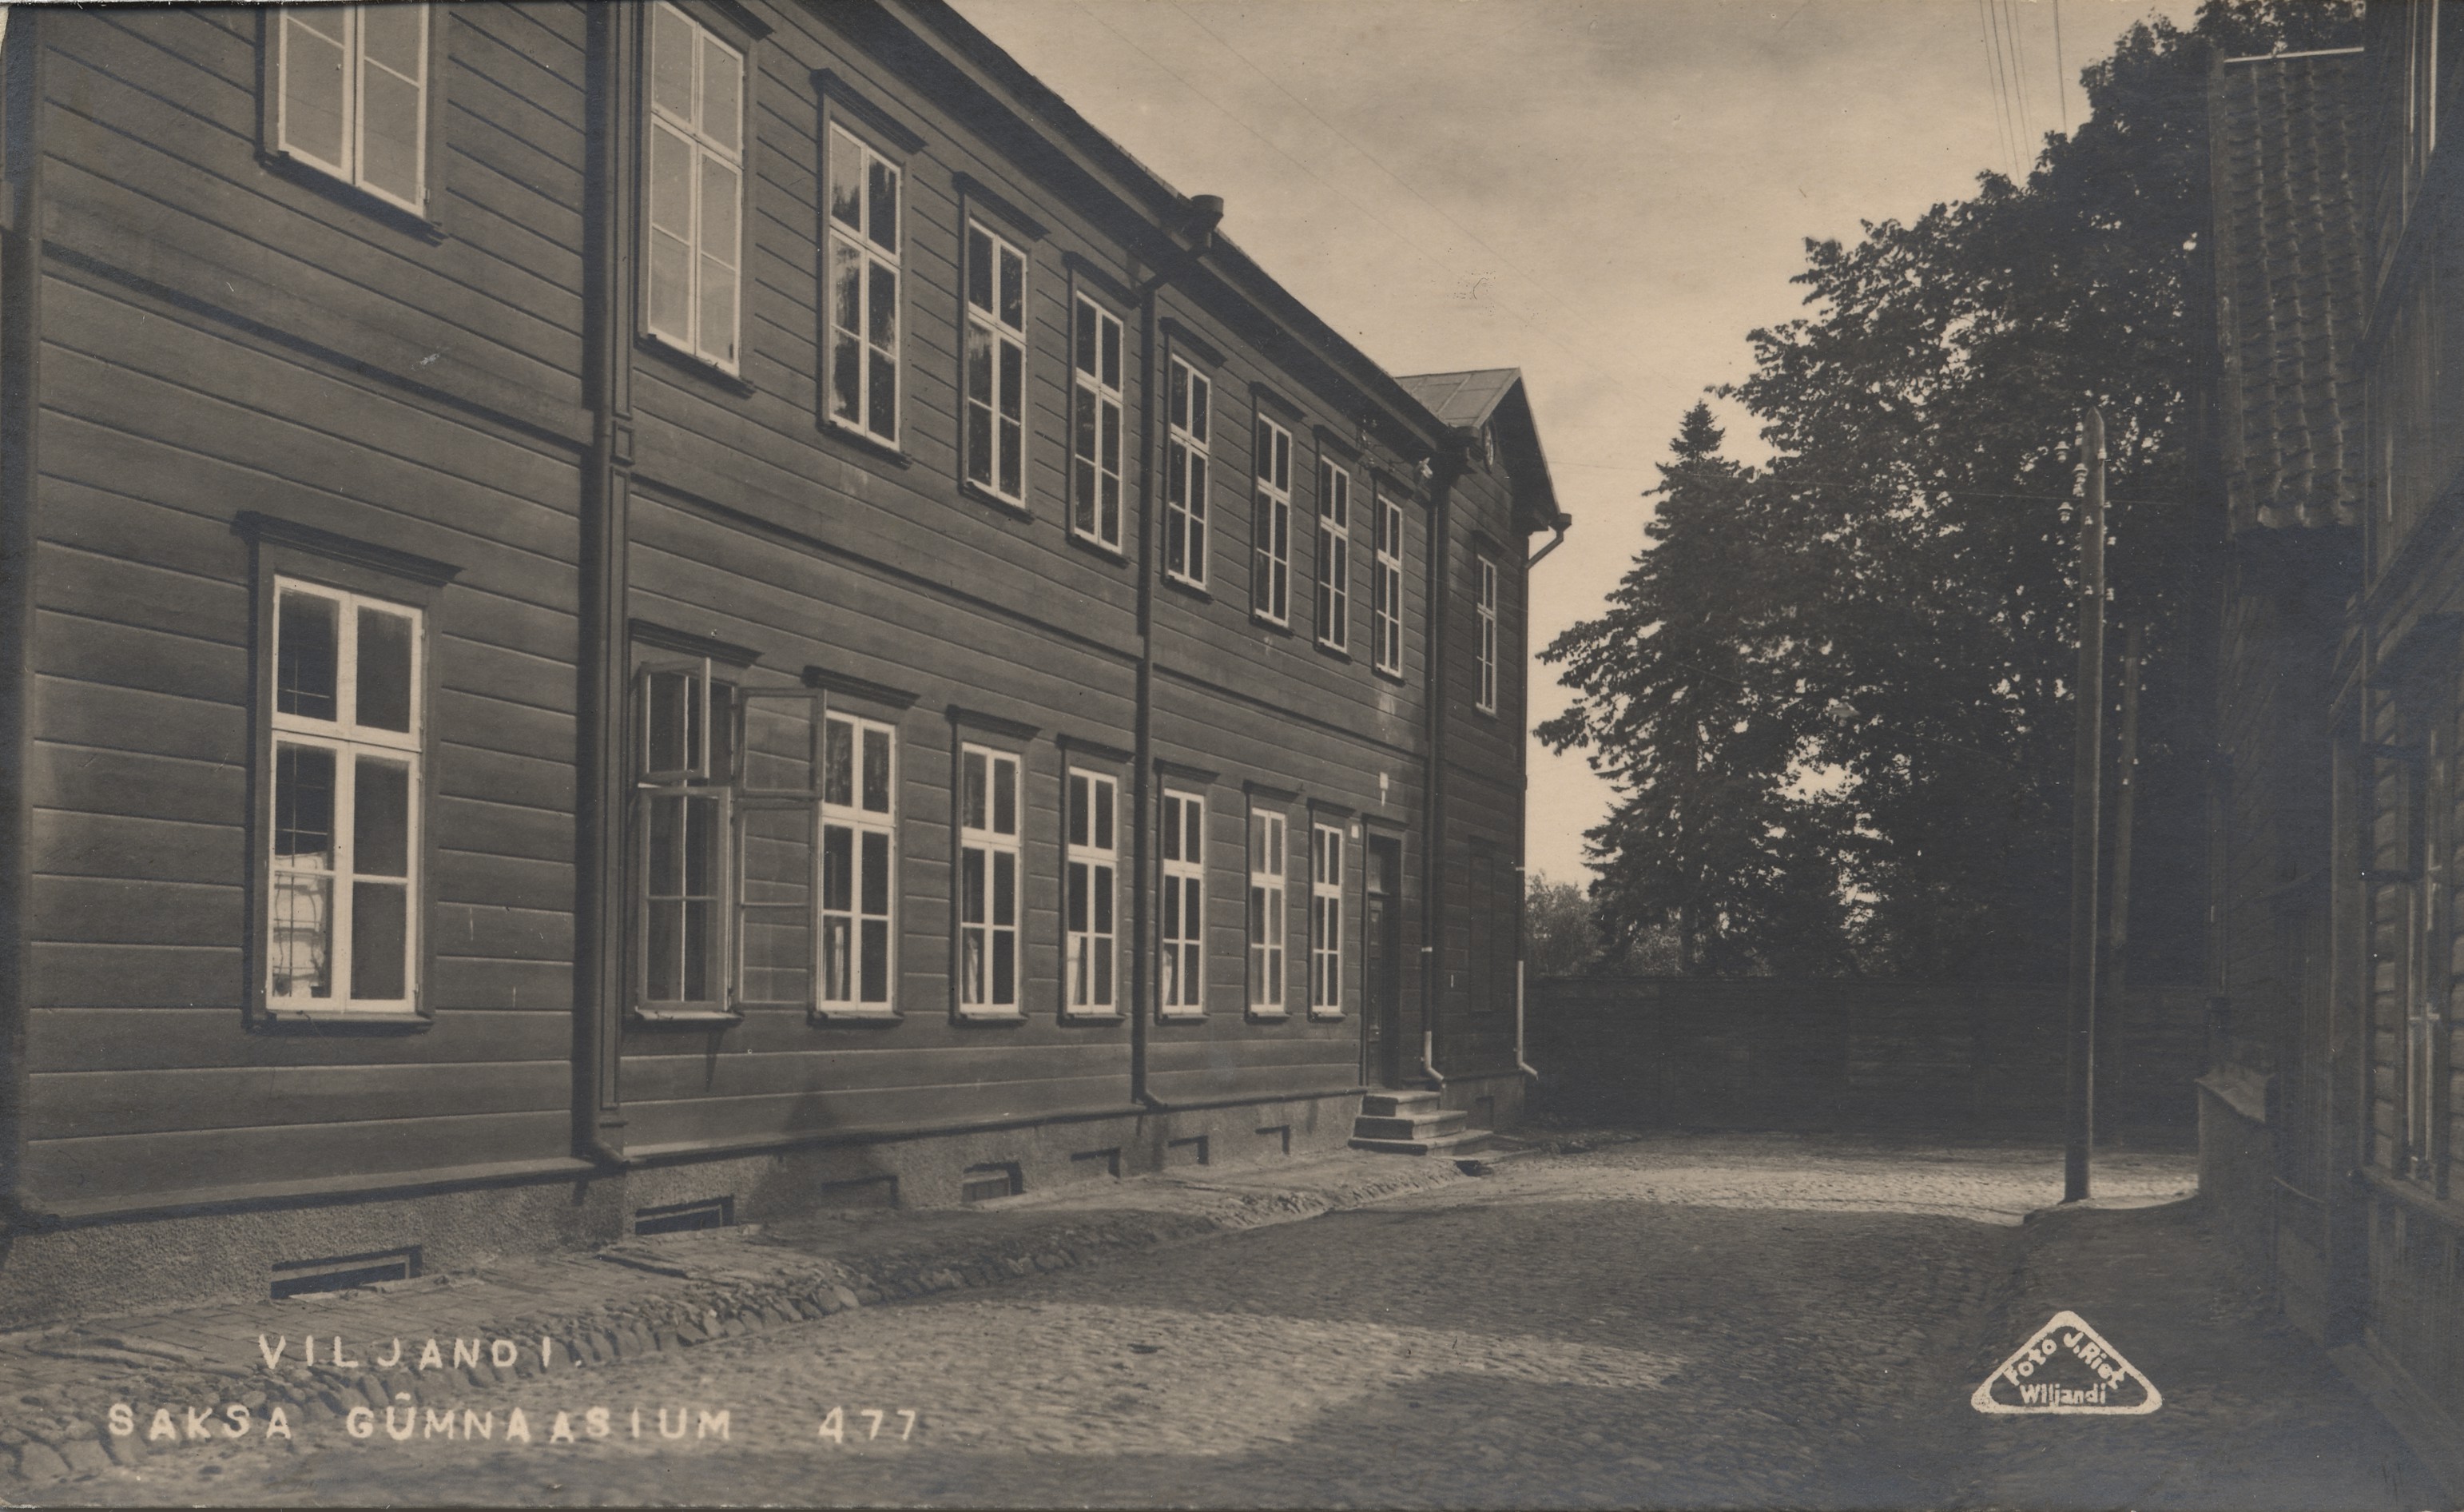 Viljandi German Gymnasium